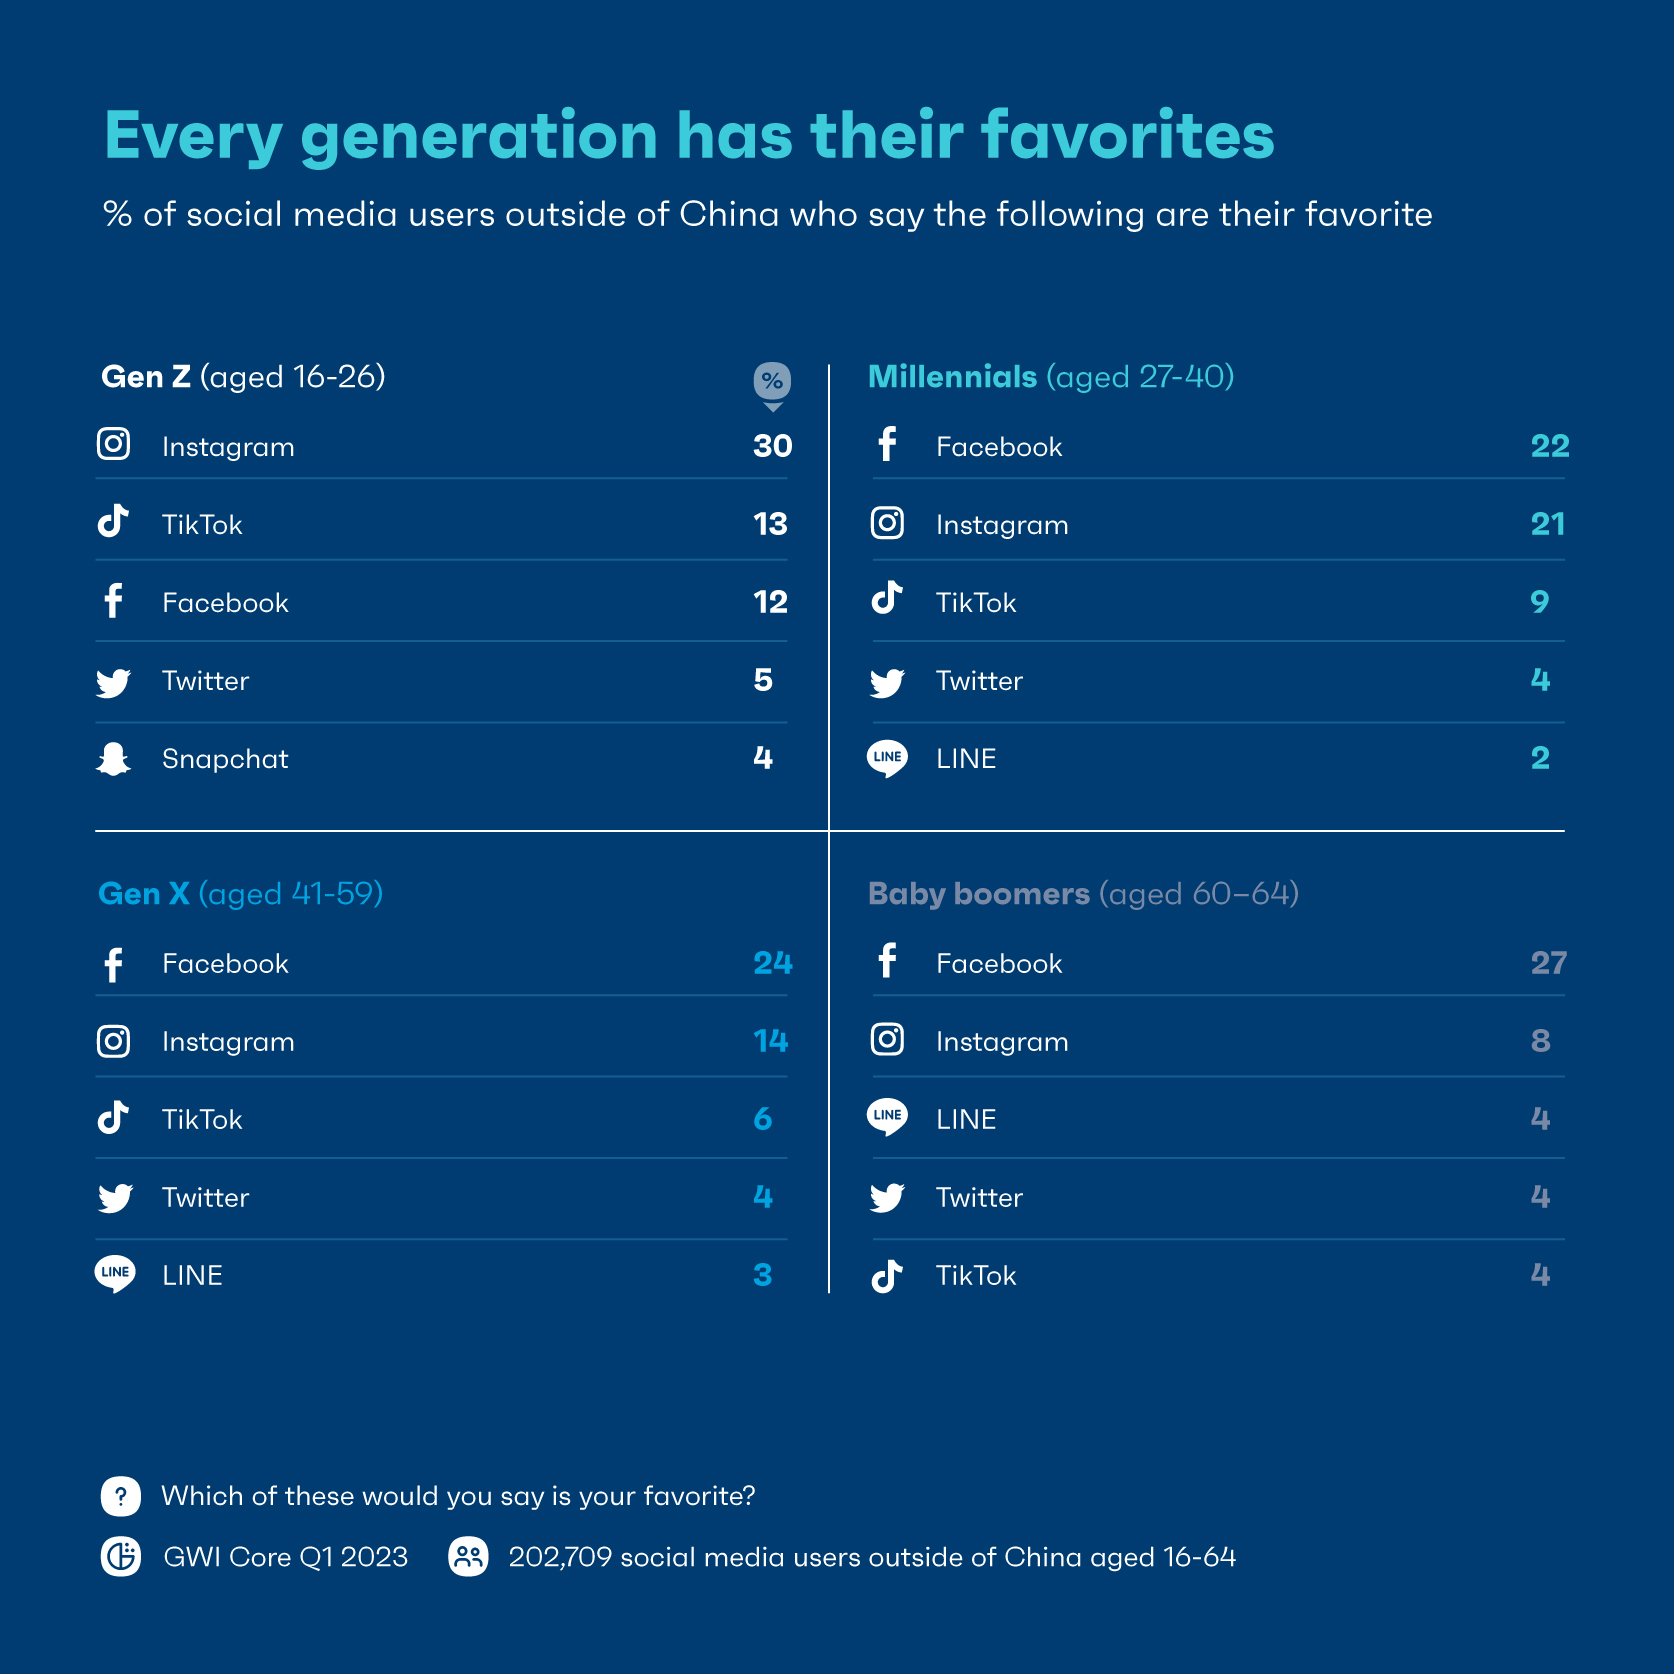 Every generation has their favorite social media platform